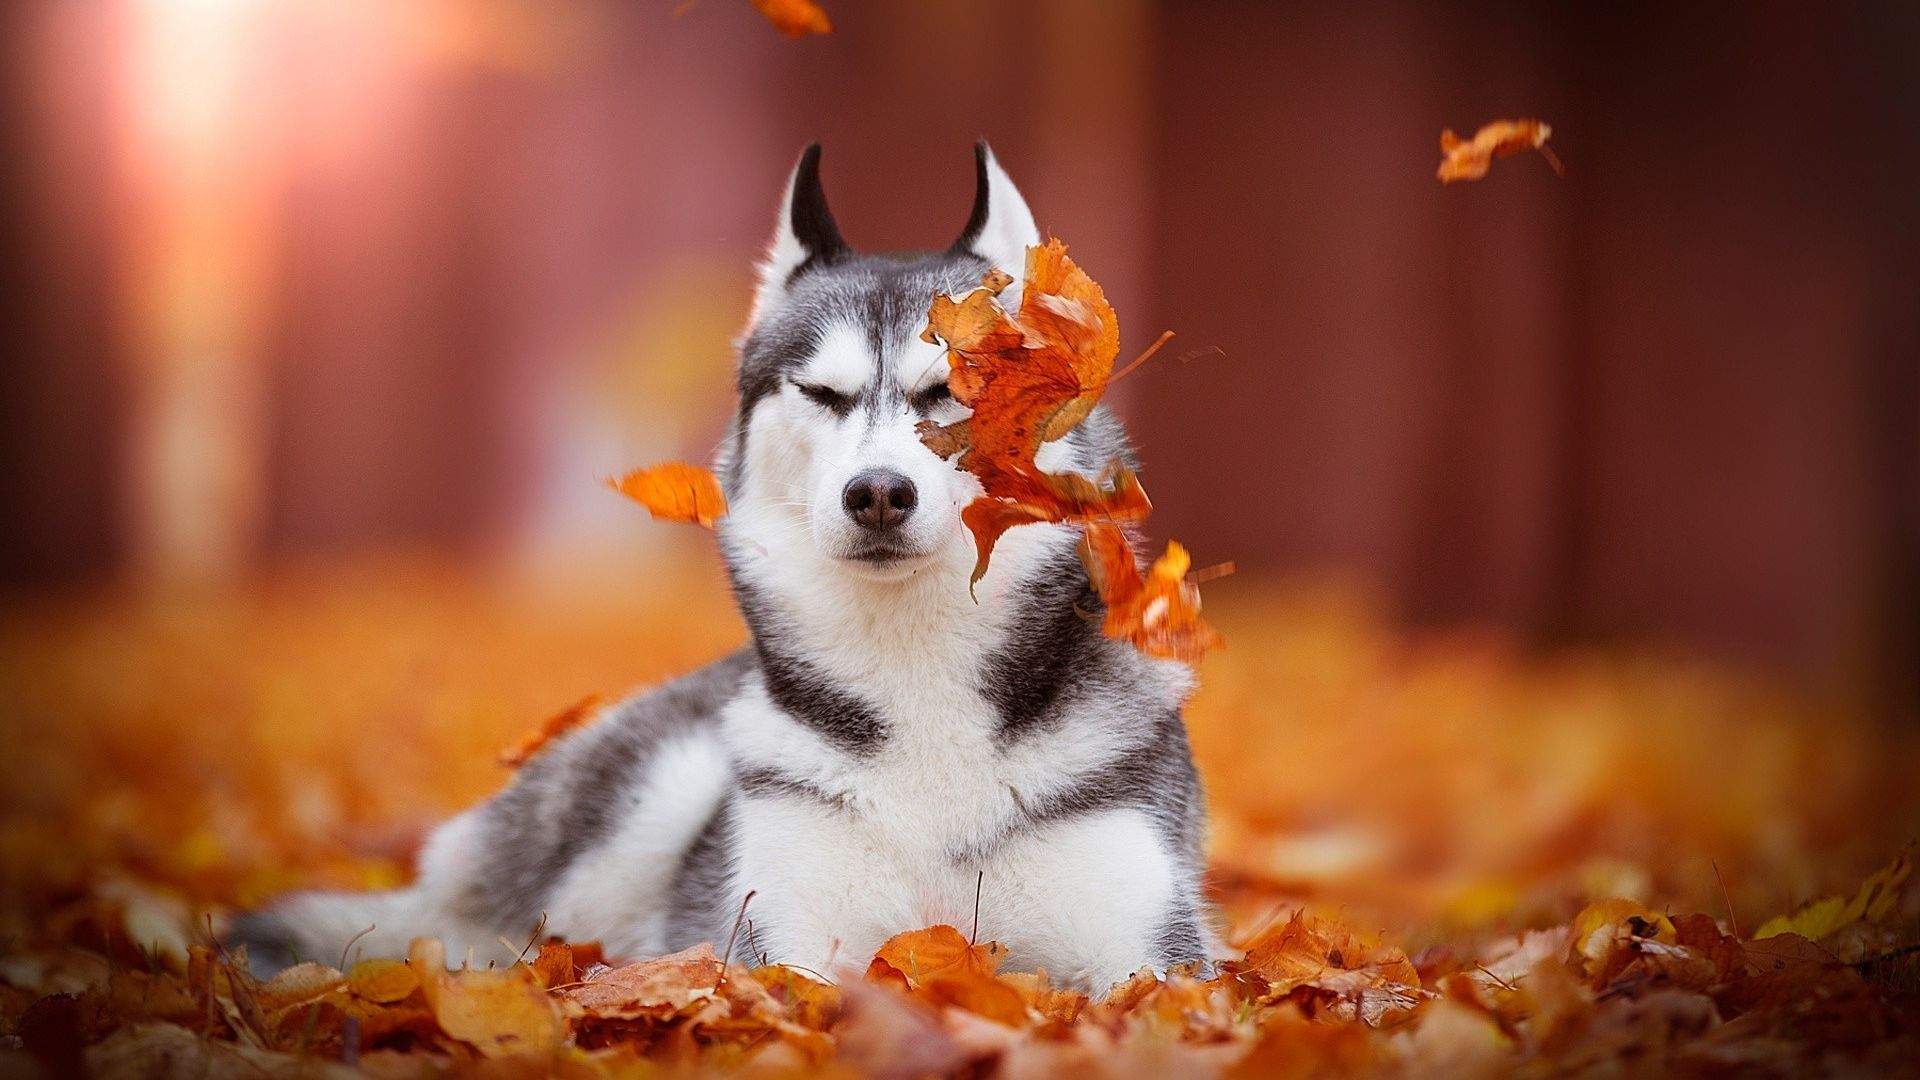 Wallpaper Husky, calm, dog, autumn